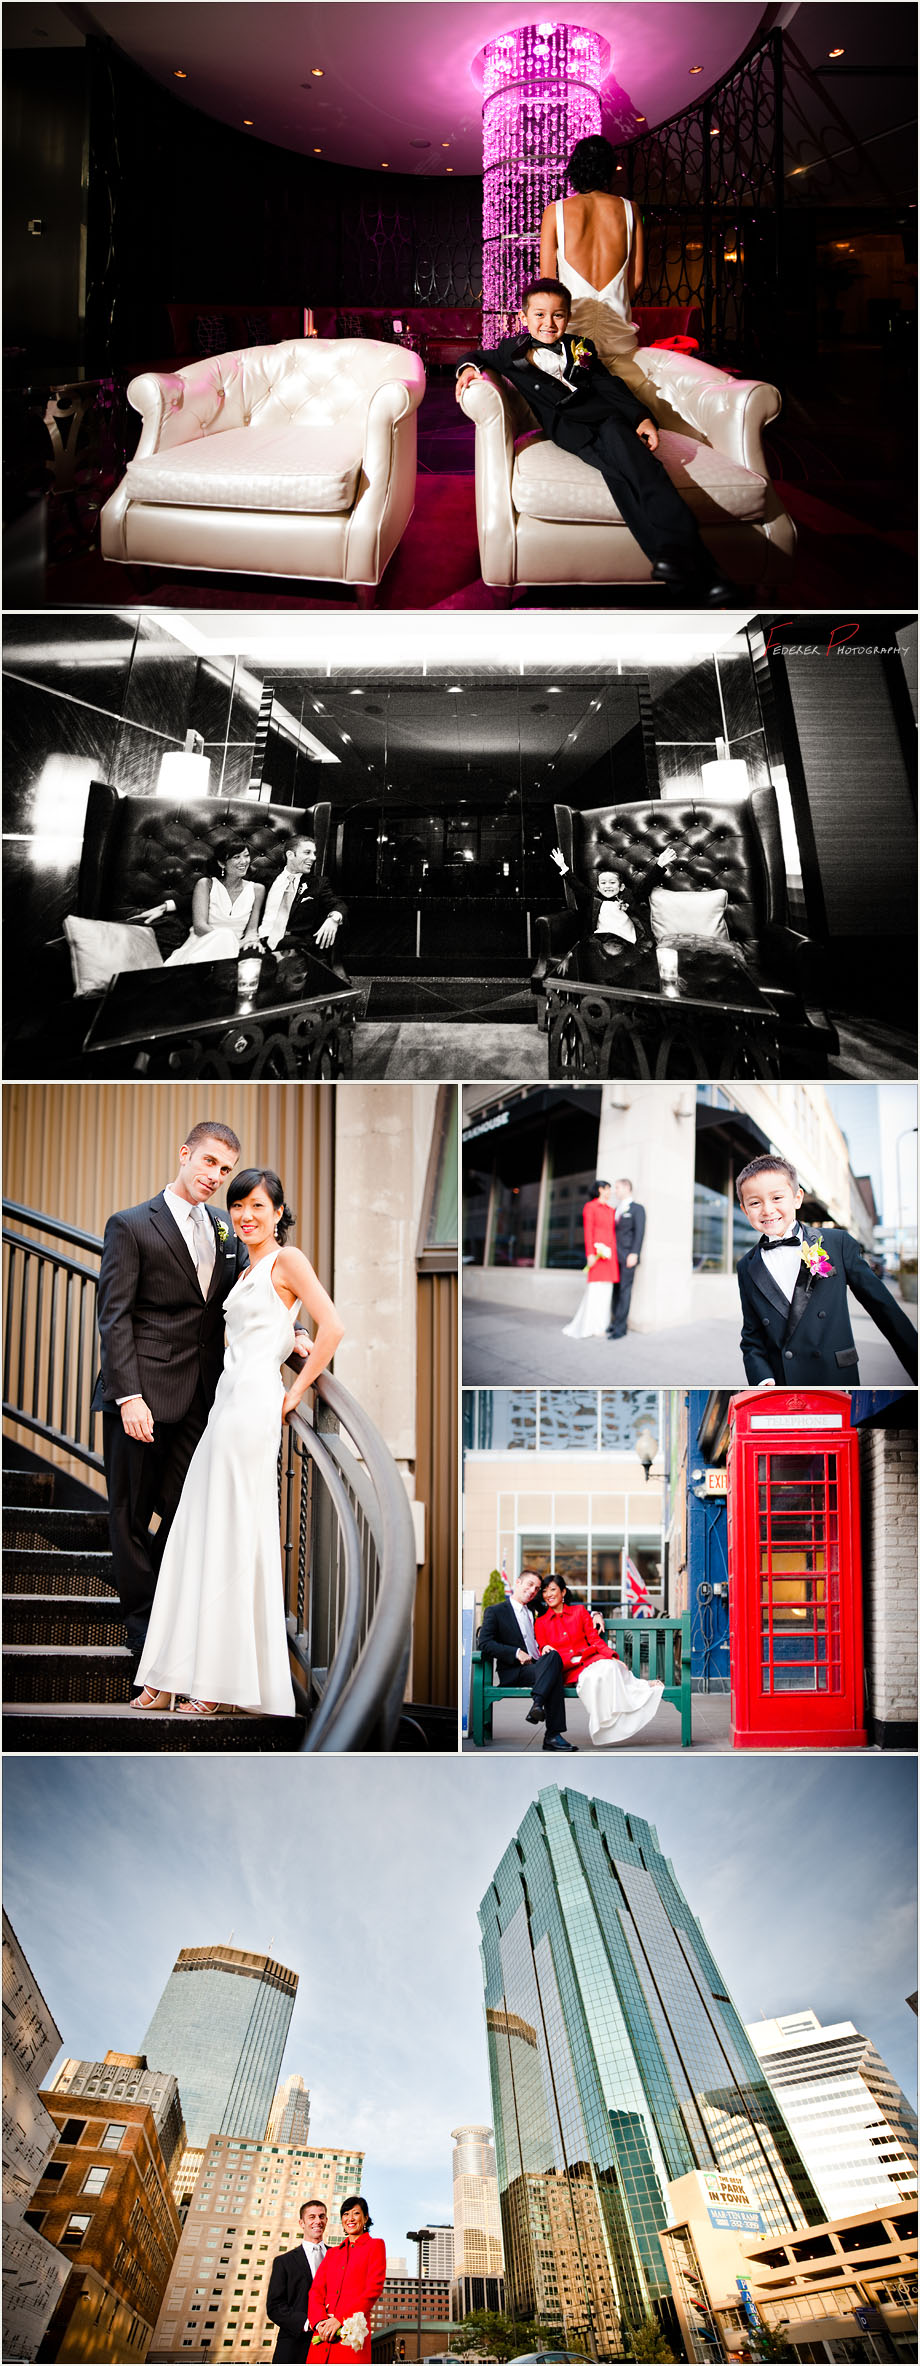 Wedding Photographs from Downtown Minneapolis, Minnesota